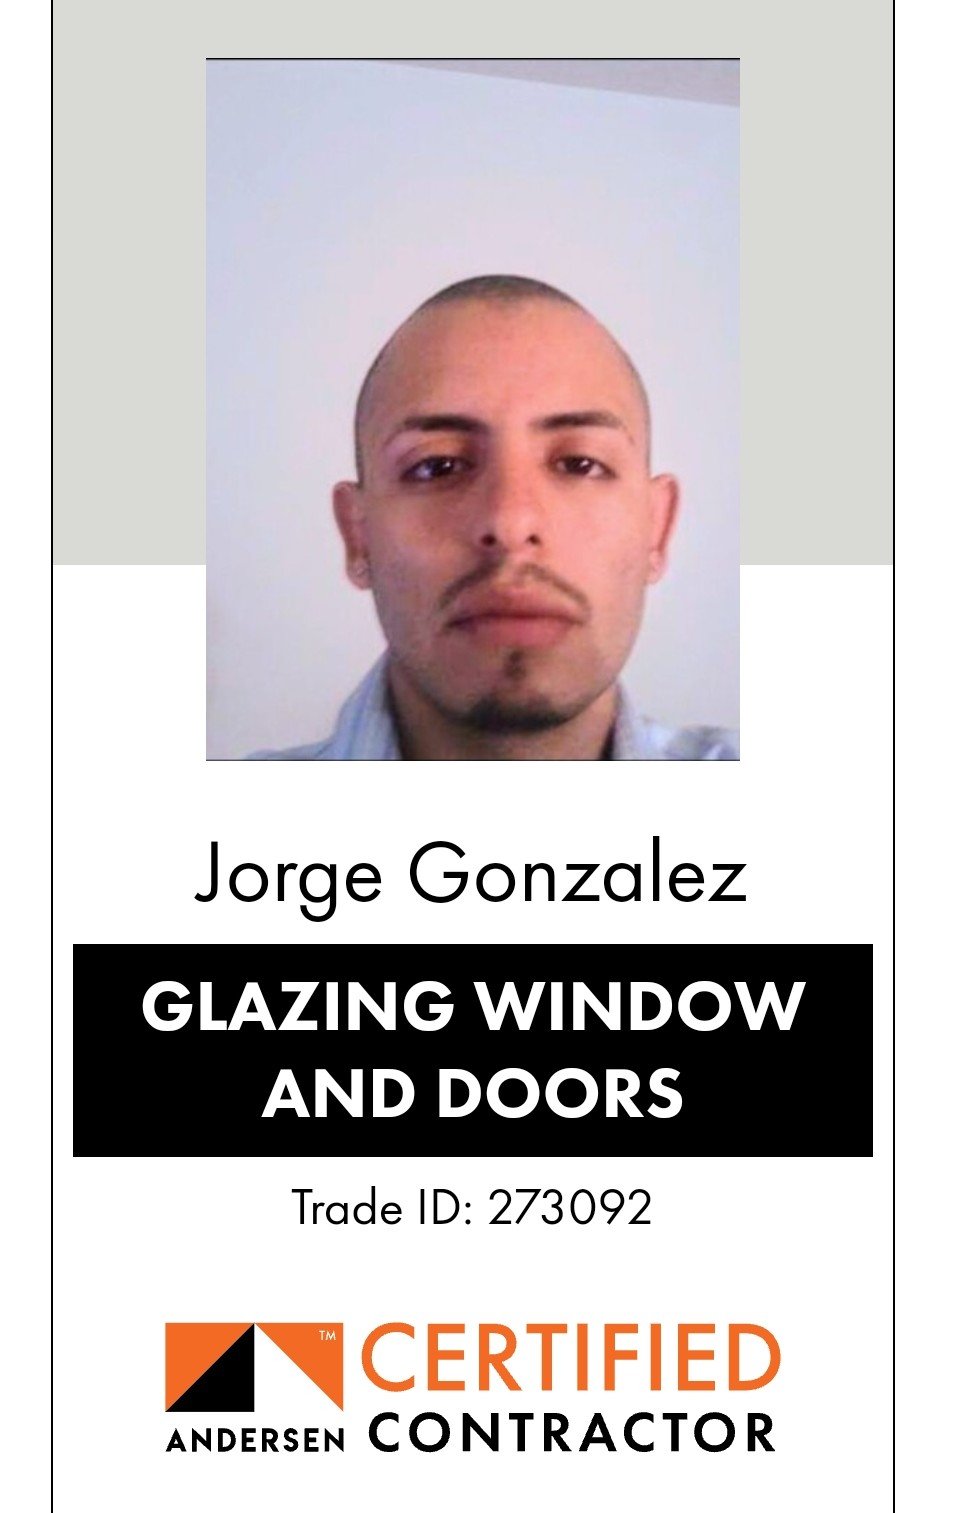 Glazing Window and Doors Logo